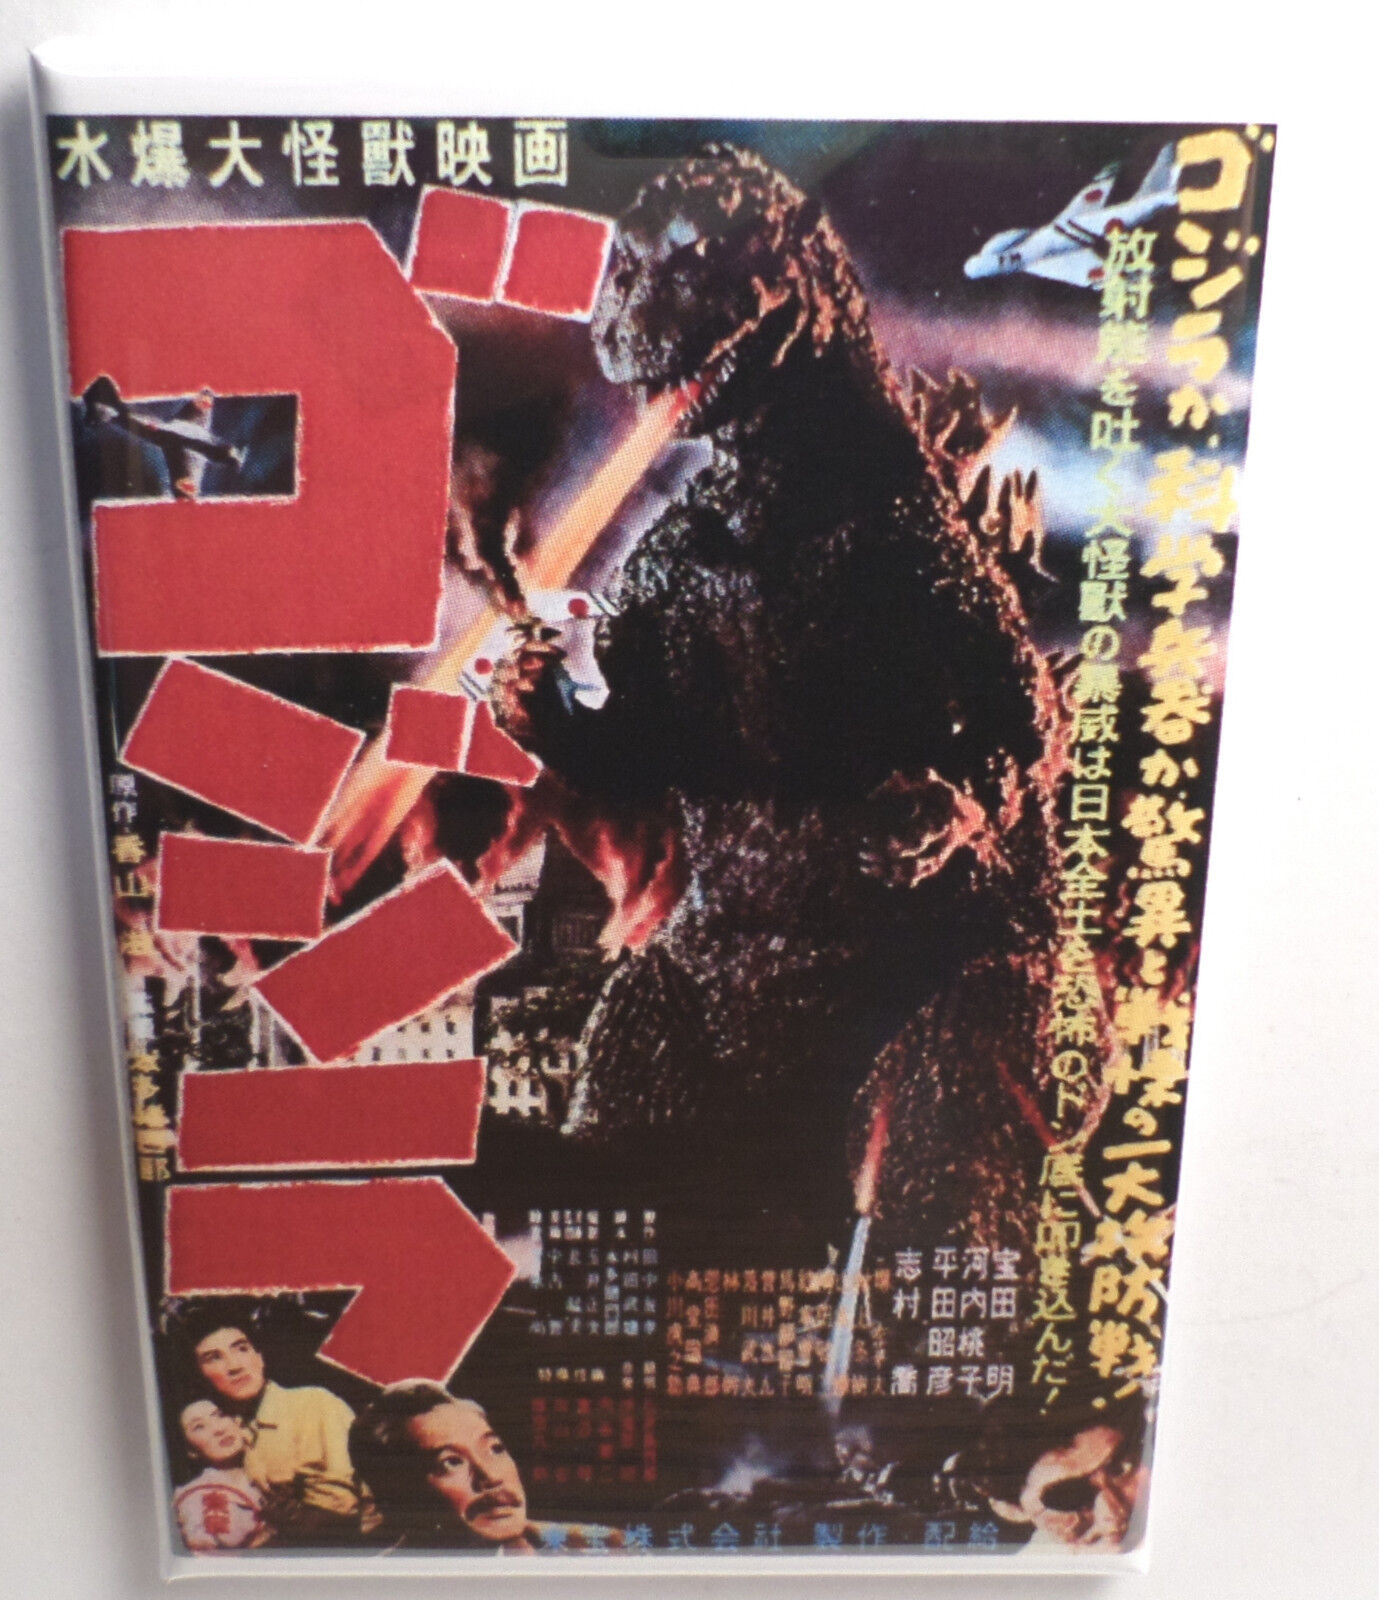 Godzilla Japanese Movie Poster 2